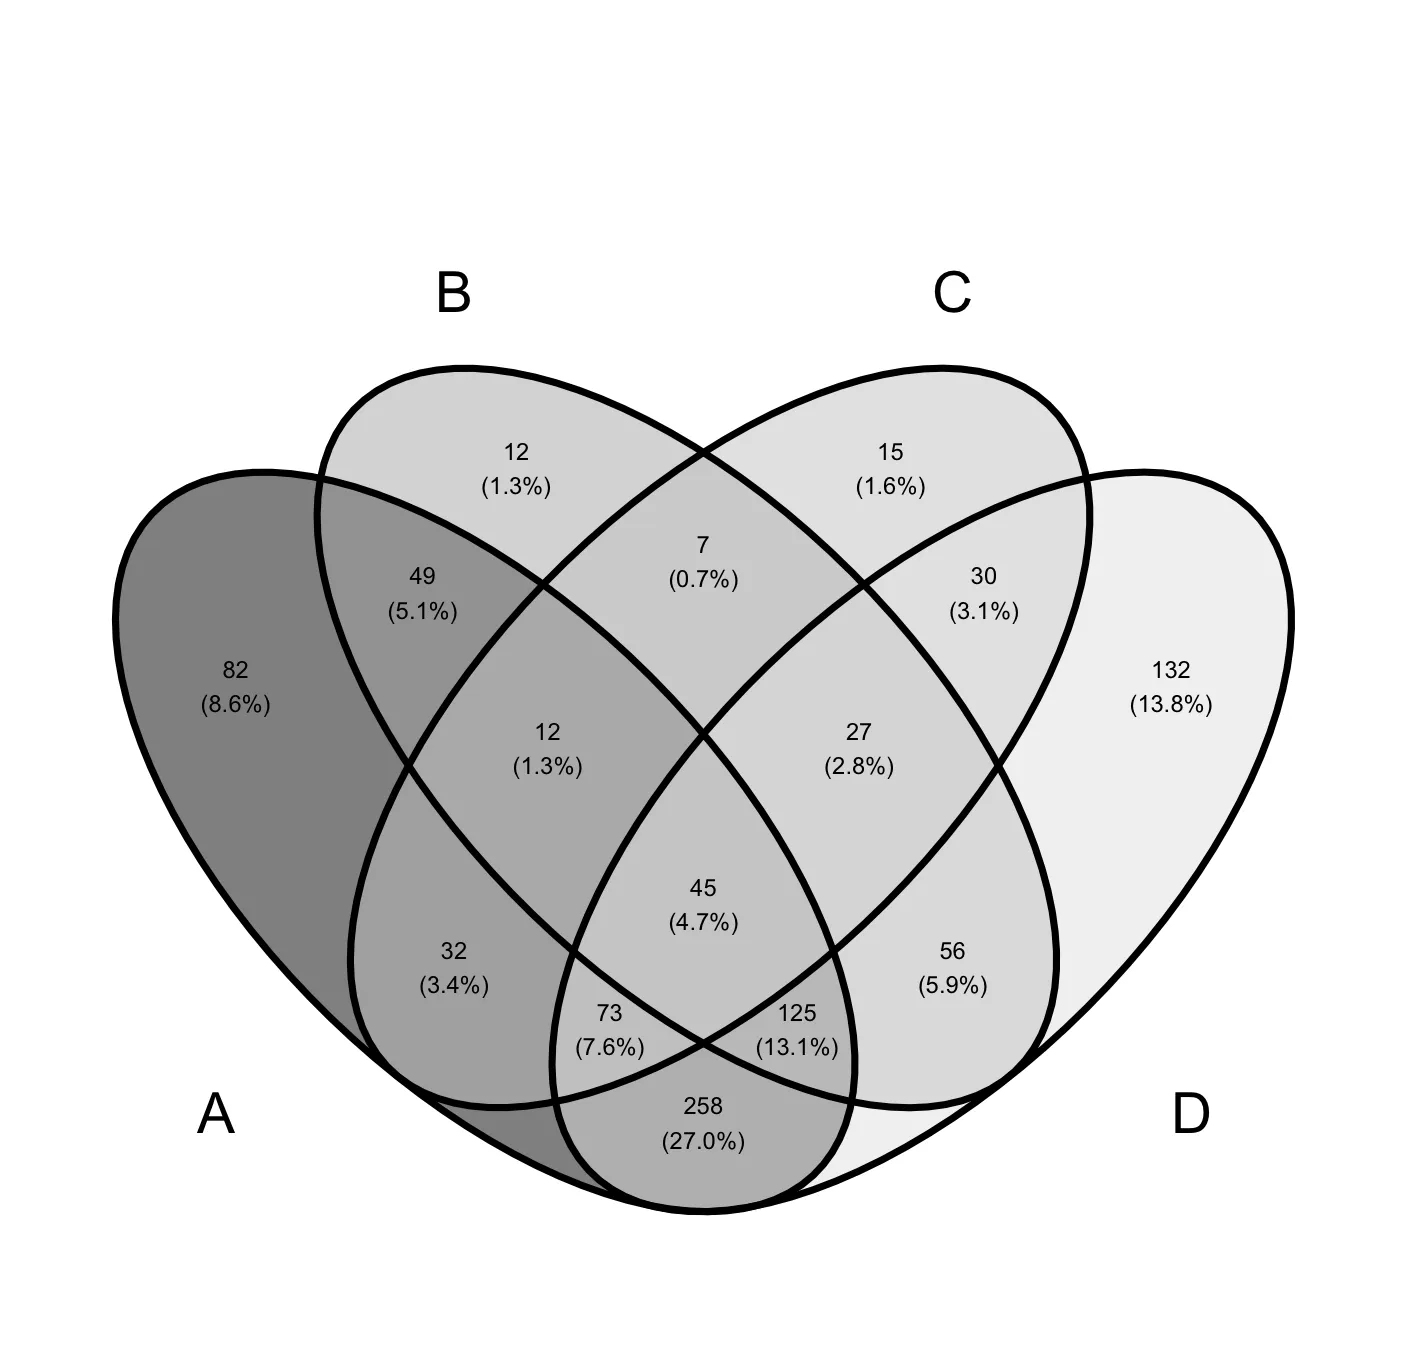 An example Venn diagram